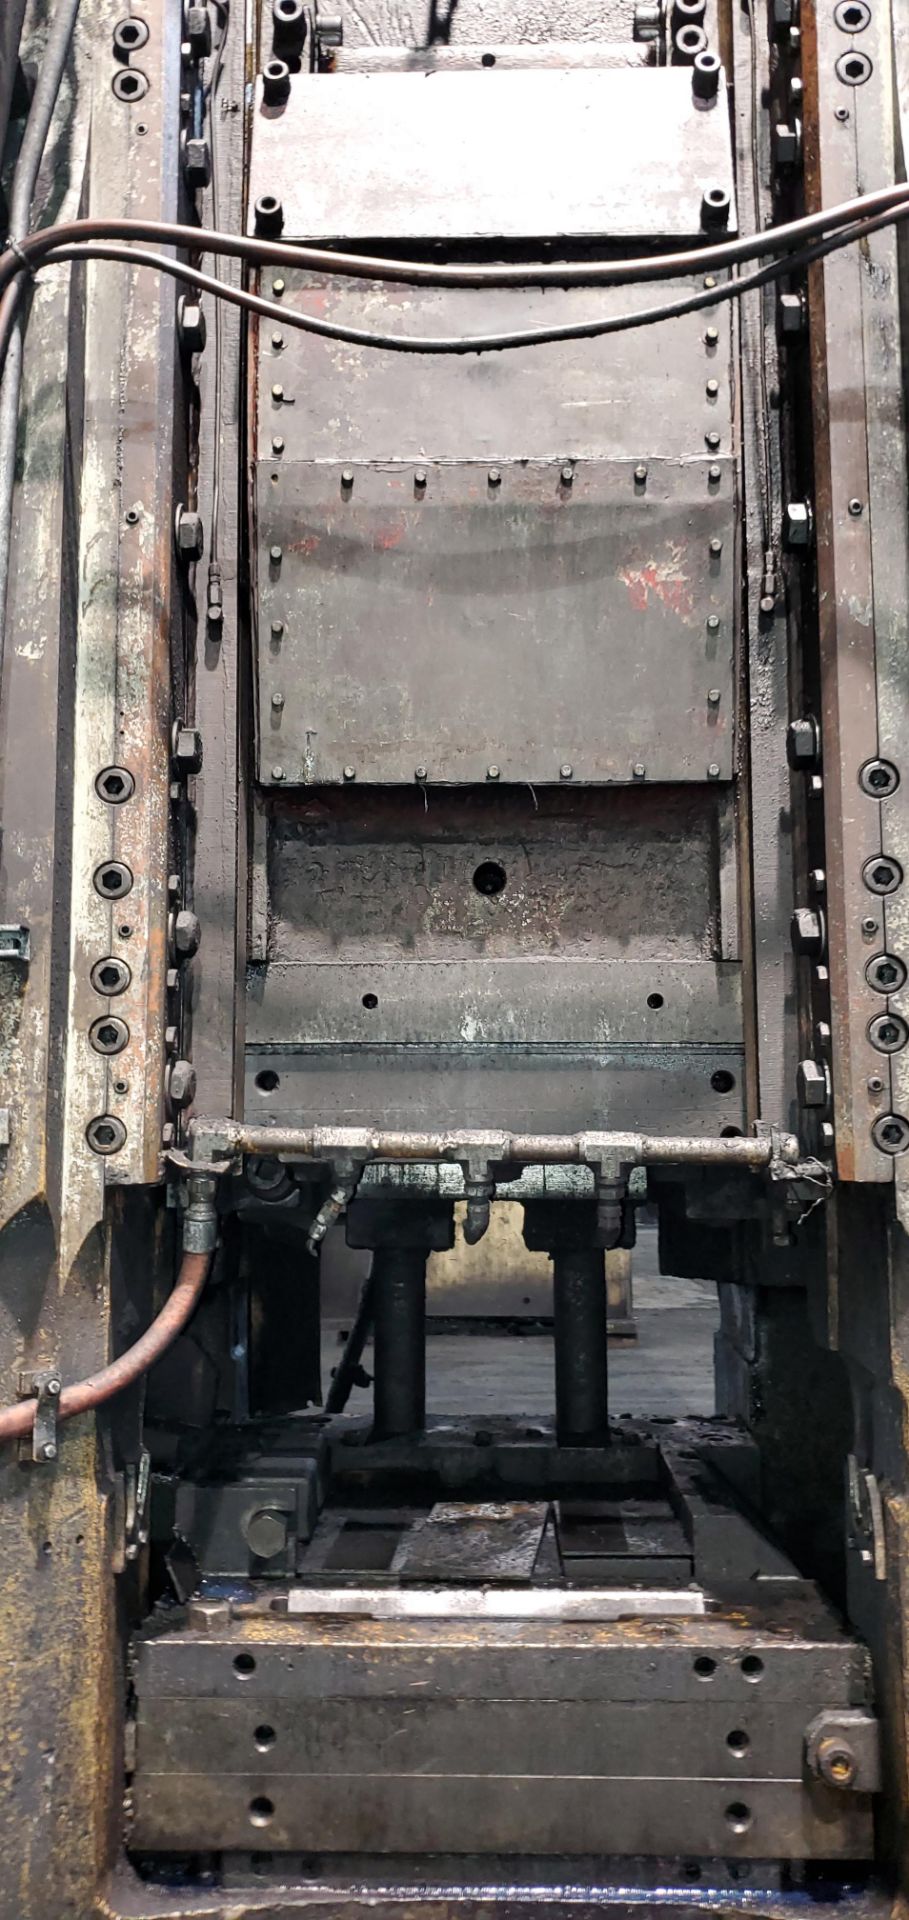 Erie 1600-Ton Mechanical Forging Press - Image 10 of 29